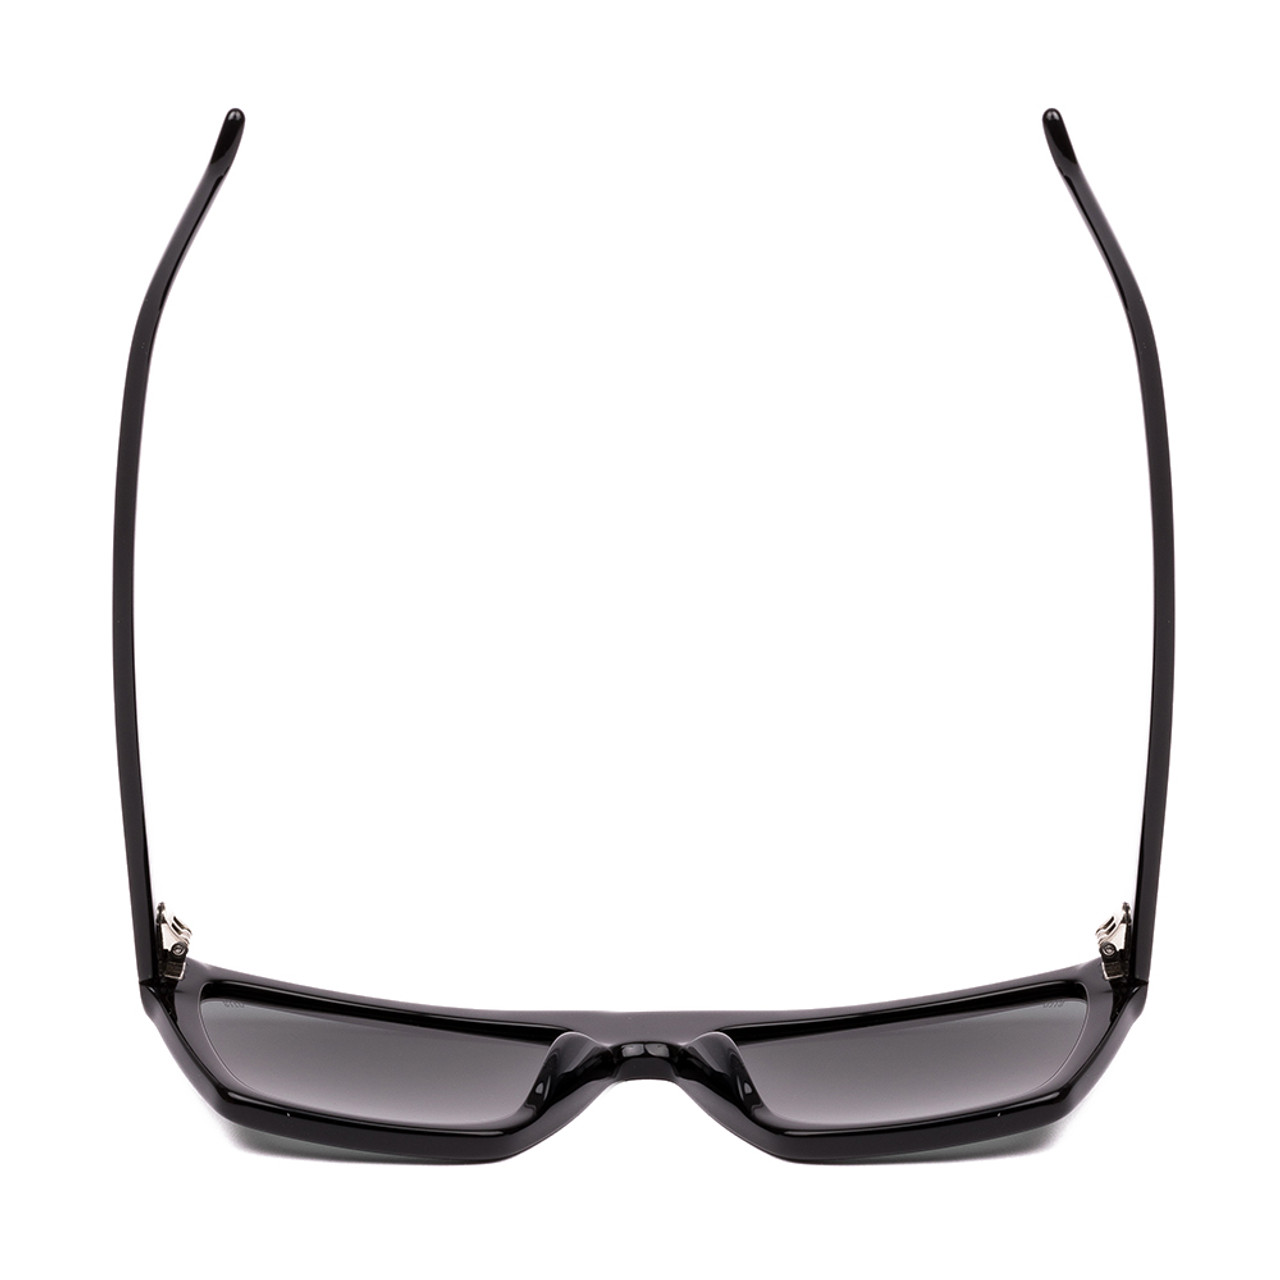 Top View of SITO SHADES BENDER Women's Rectangular Designer Sunglasses Black/Iron Gray 57 mm